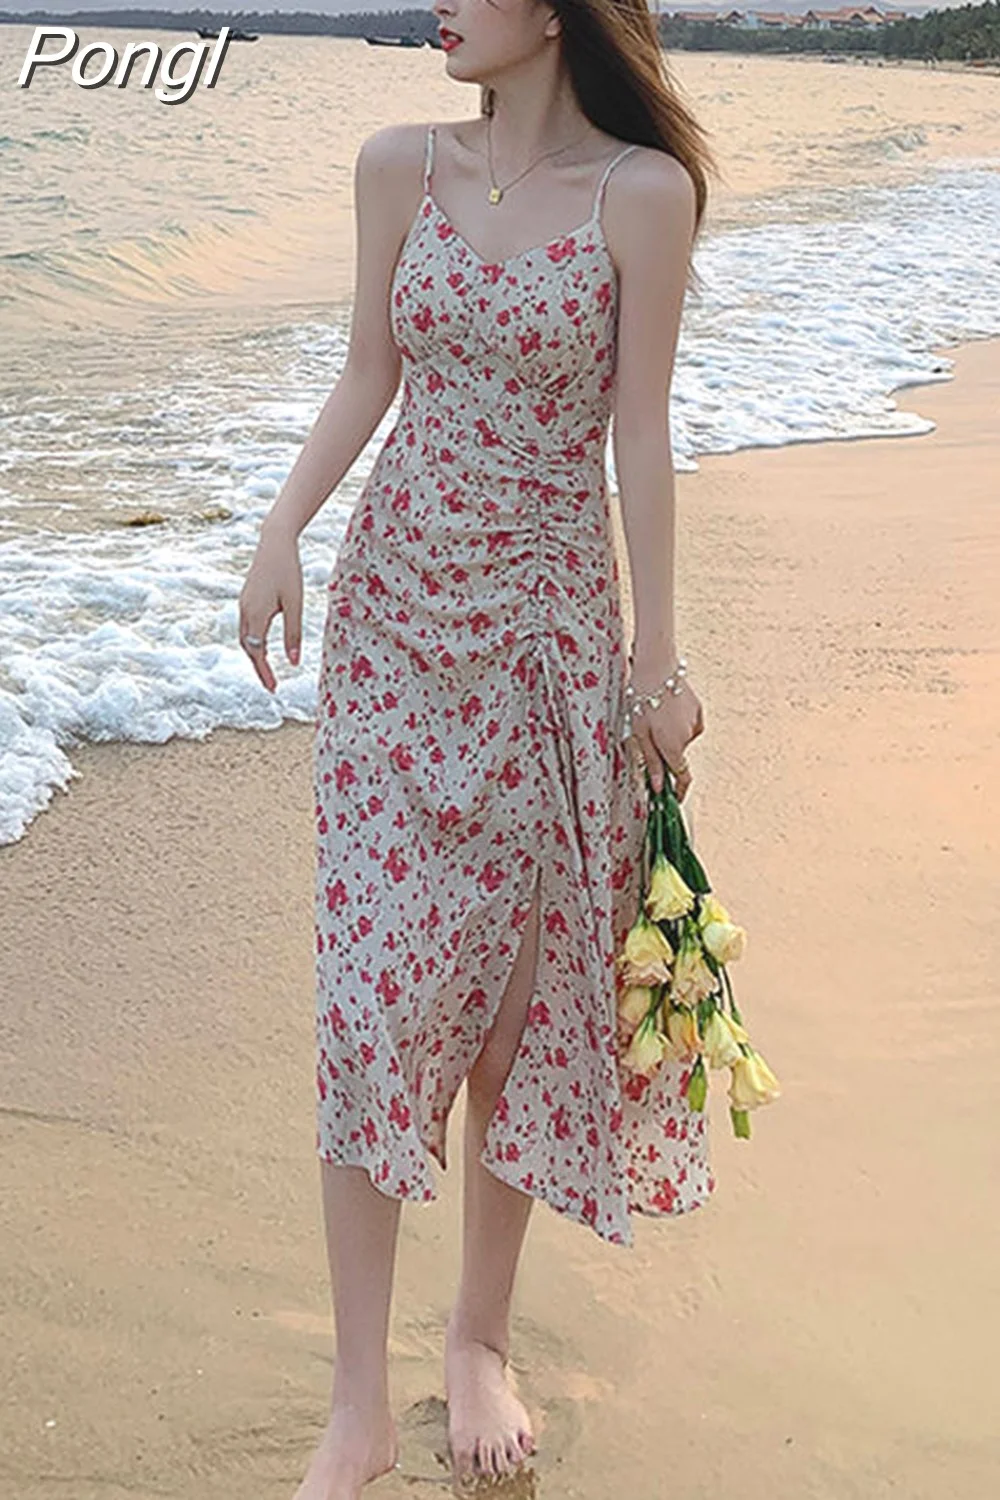 Pongl Dress Women Floral Side-slit Design Shirring Romantic Sexy Beach Elegant Fashion Sundress Korean Style Retro Tender Femme